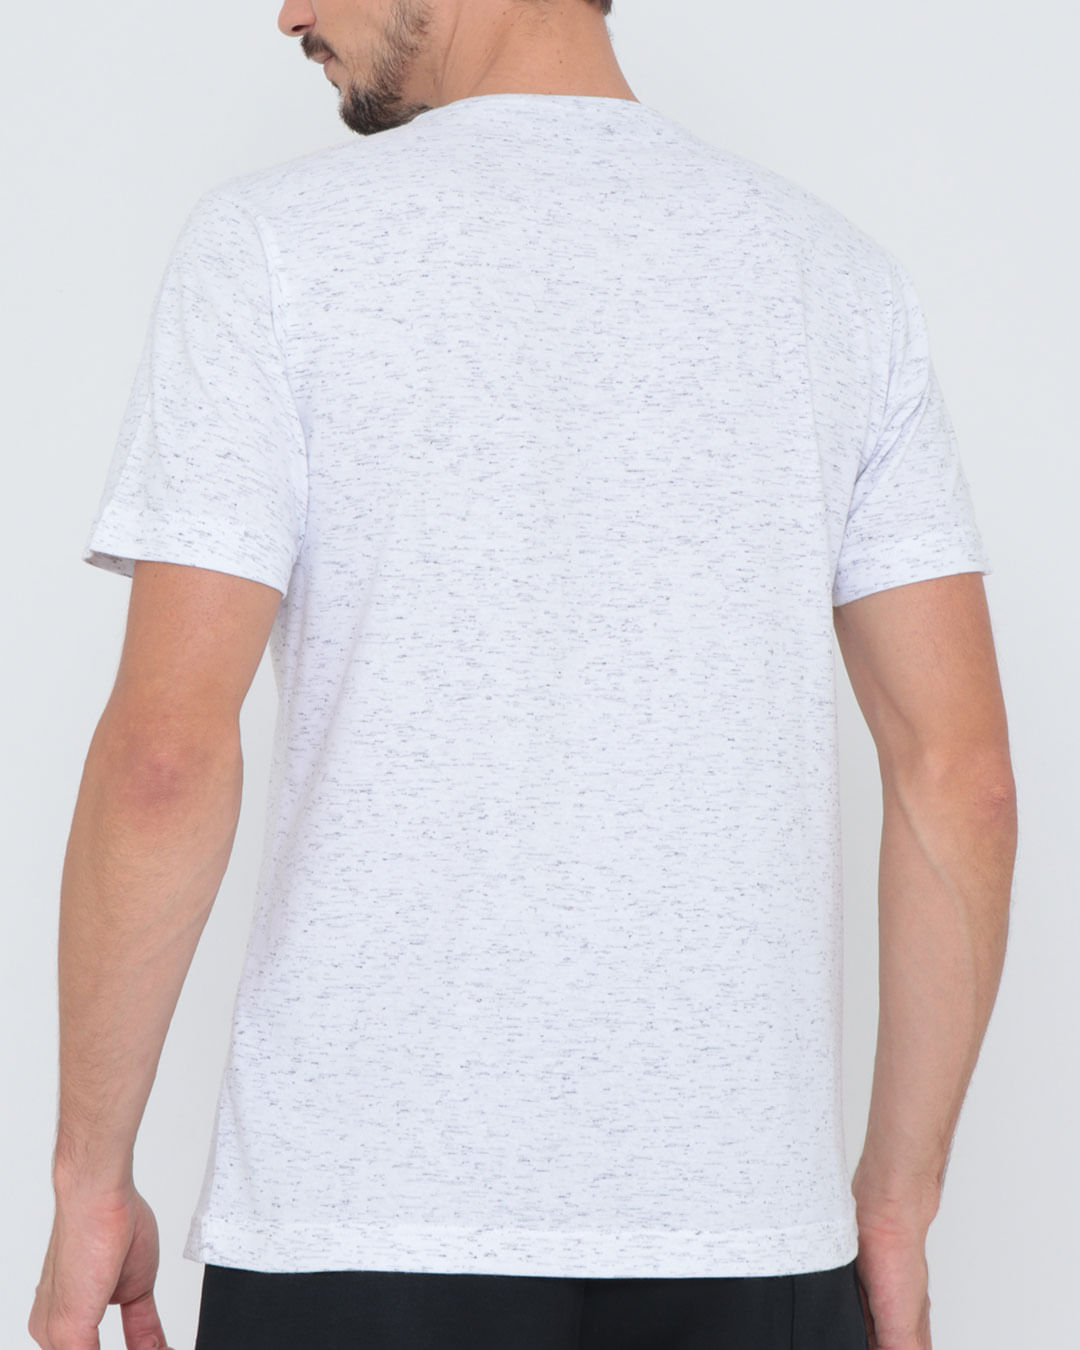 Camiseta-Flame-Recorte-Tela-Branco-e-Preto